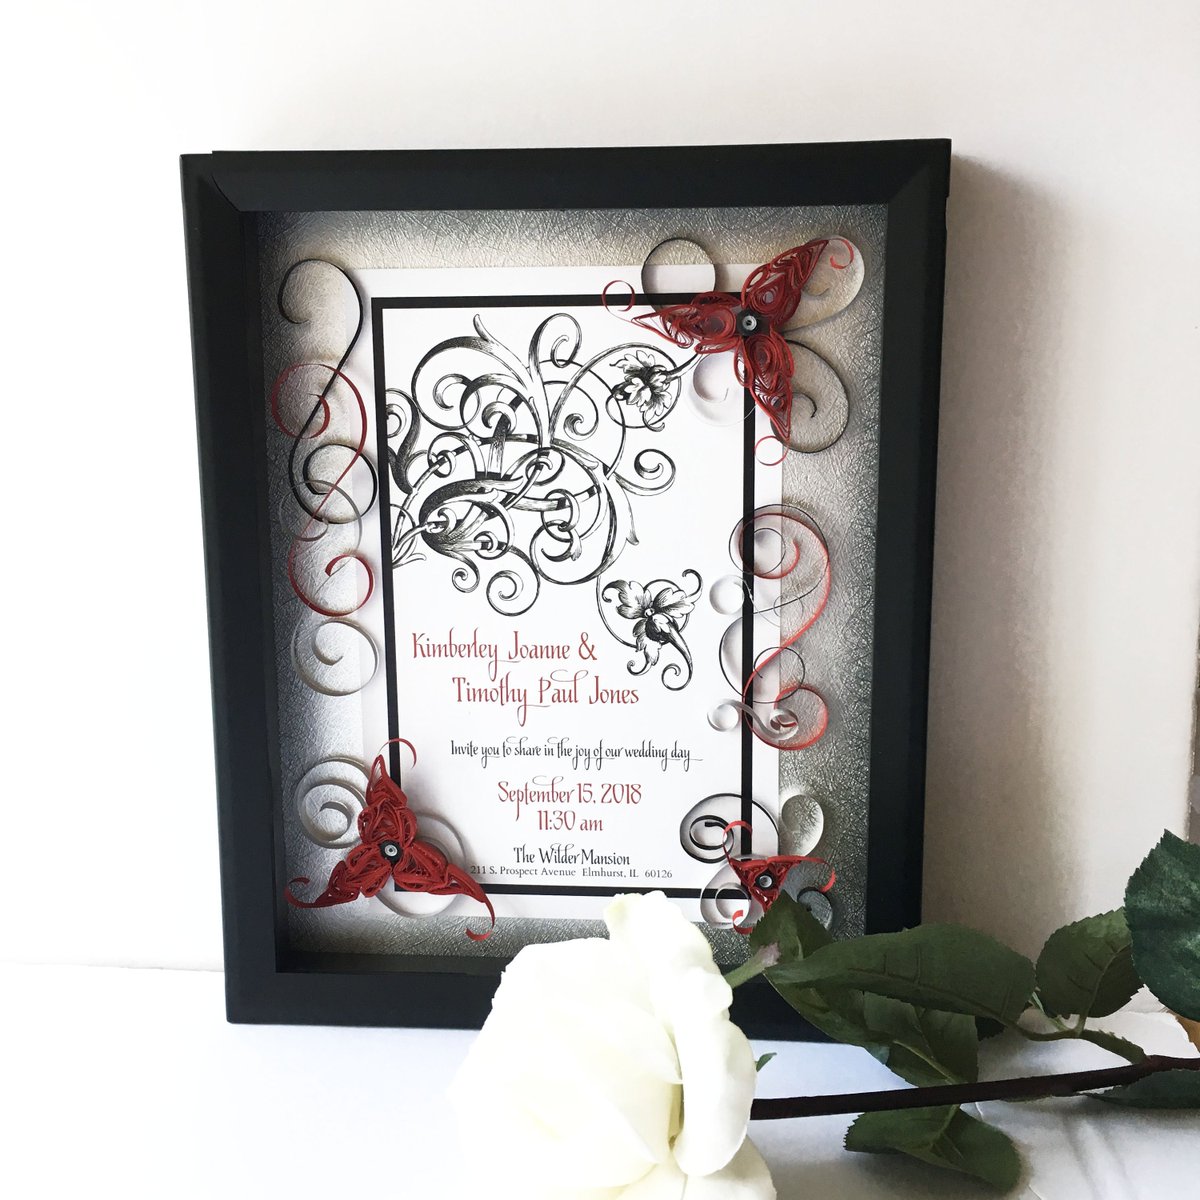 Red, Black and Silver Themed Wedding Shadow Box Gift seethis.co/JmnOlE/ #weddingtabledecor  #weddinginvitationgift #weddingcouplegift #firstanniversarygift #weddinginvitationkeepsake